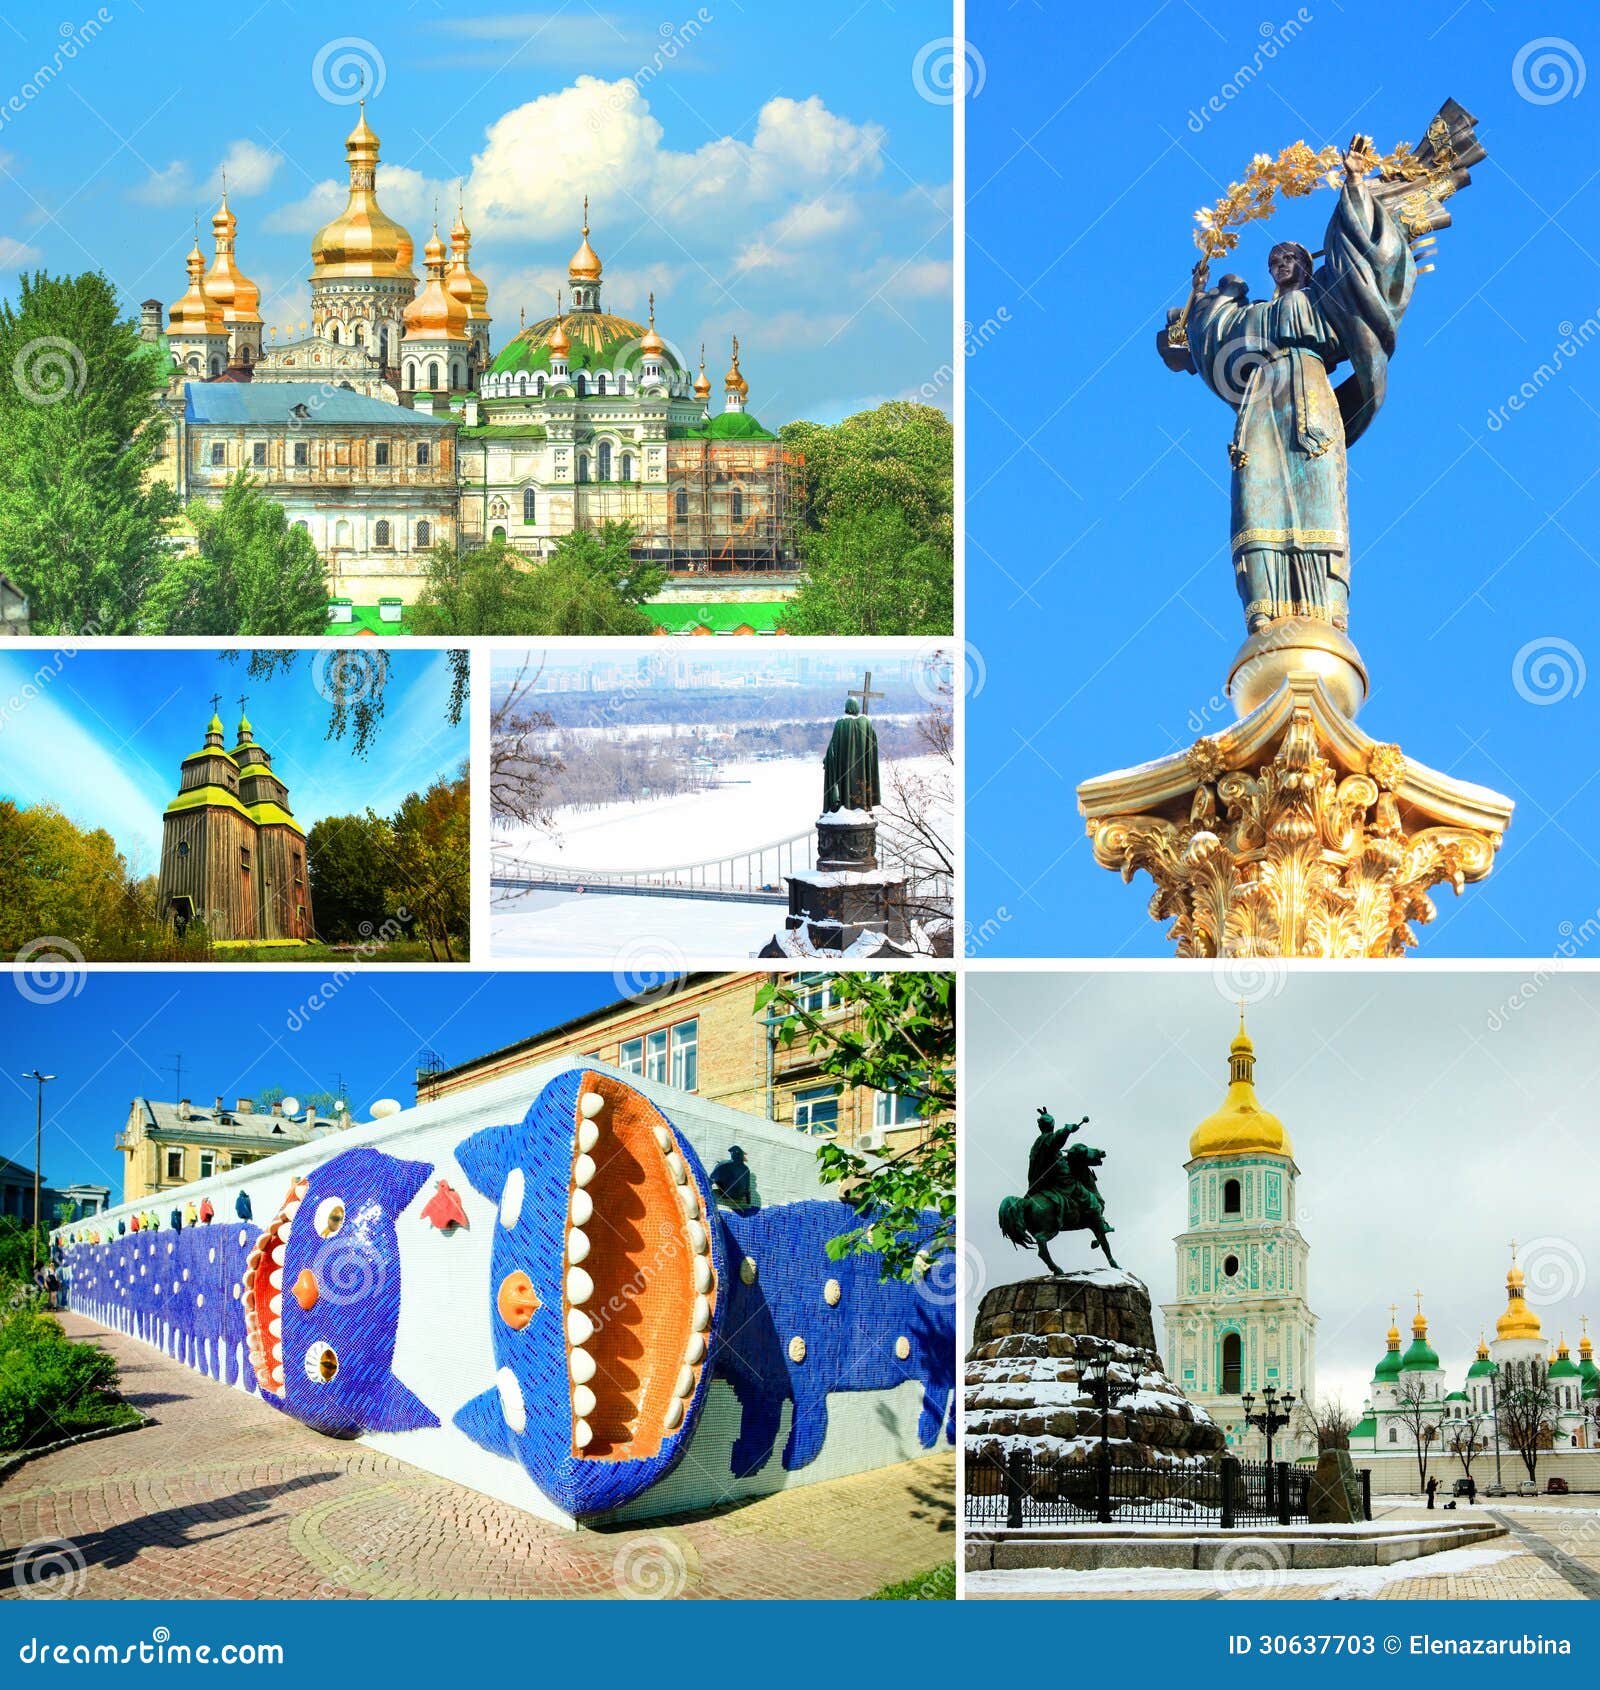 kiev collage